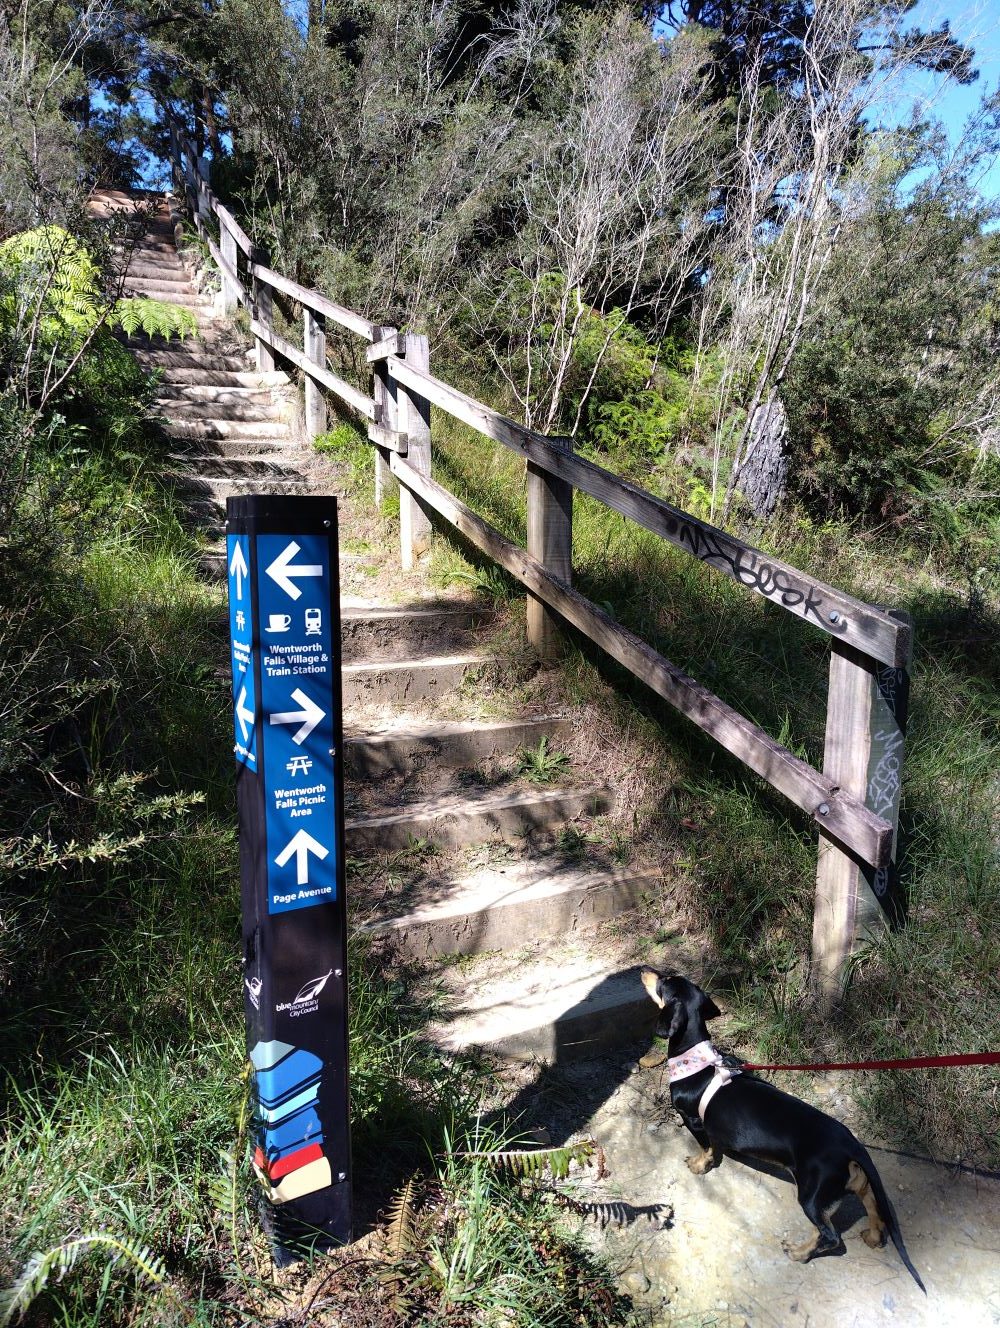 Darwins Walk Wentworth Falls is signposted